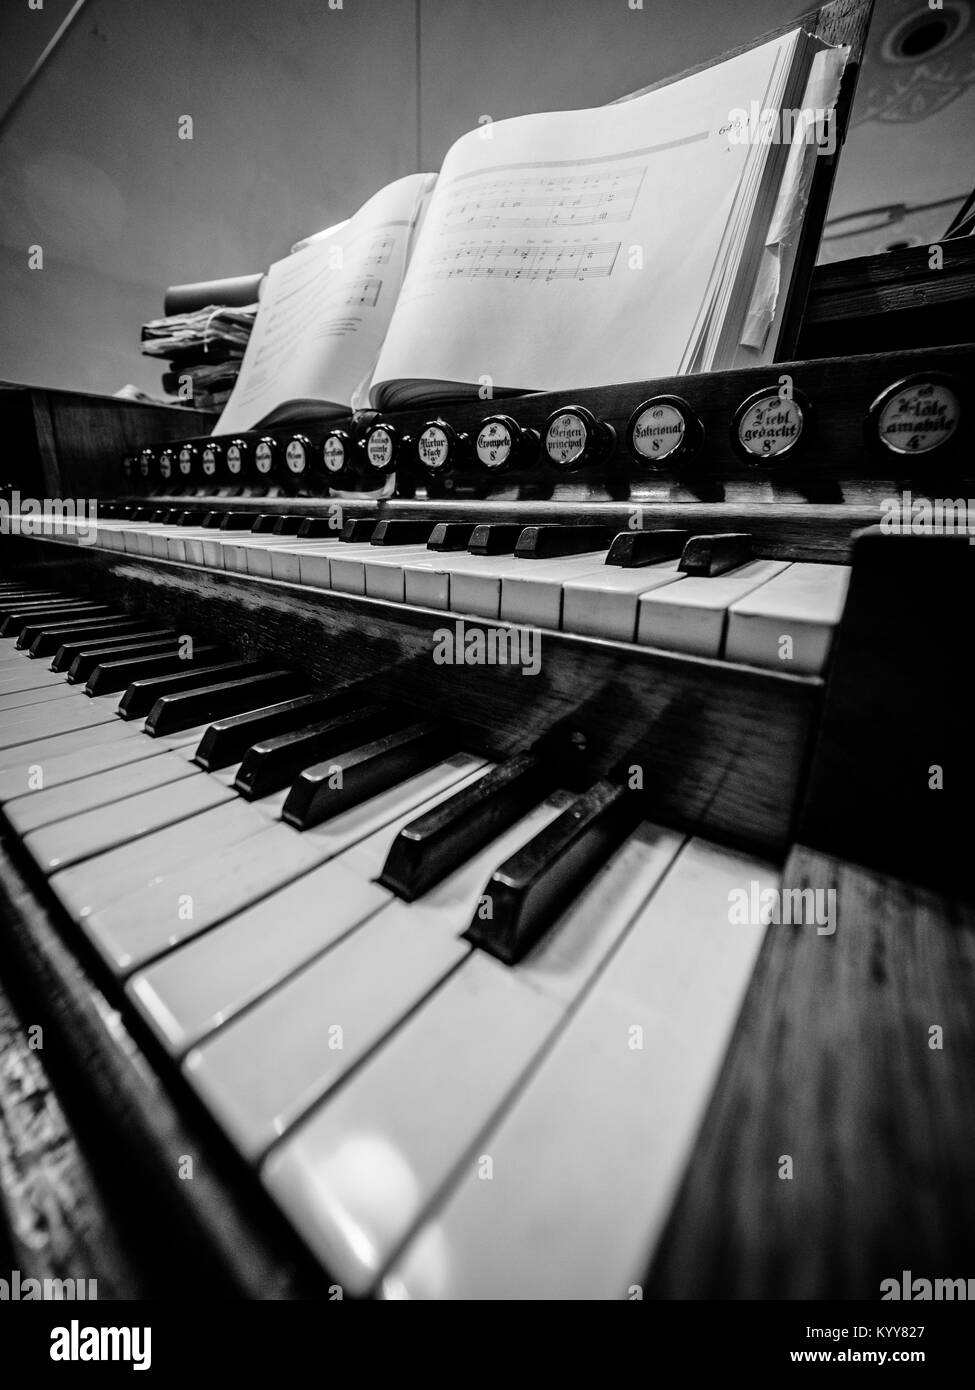 Vintage old piano. Close-up of keyboard keys Stock Photo